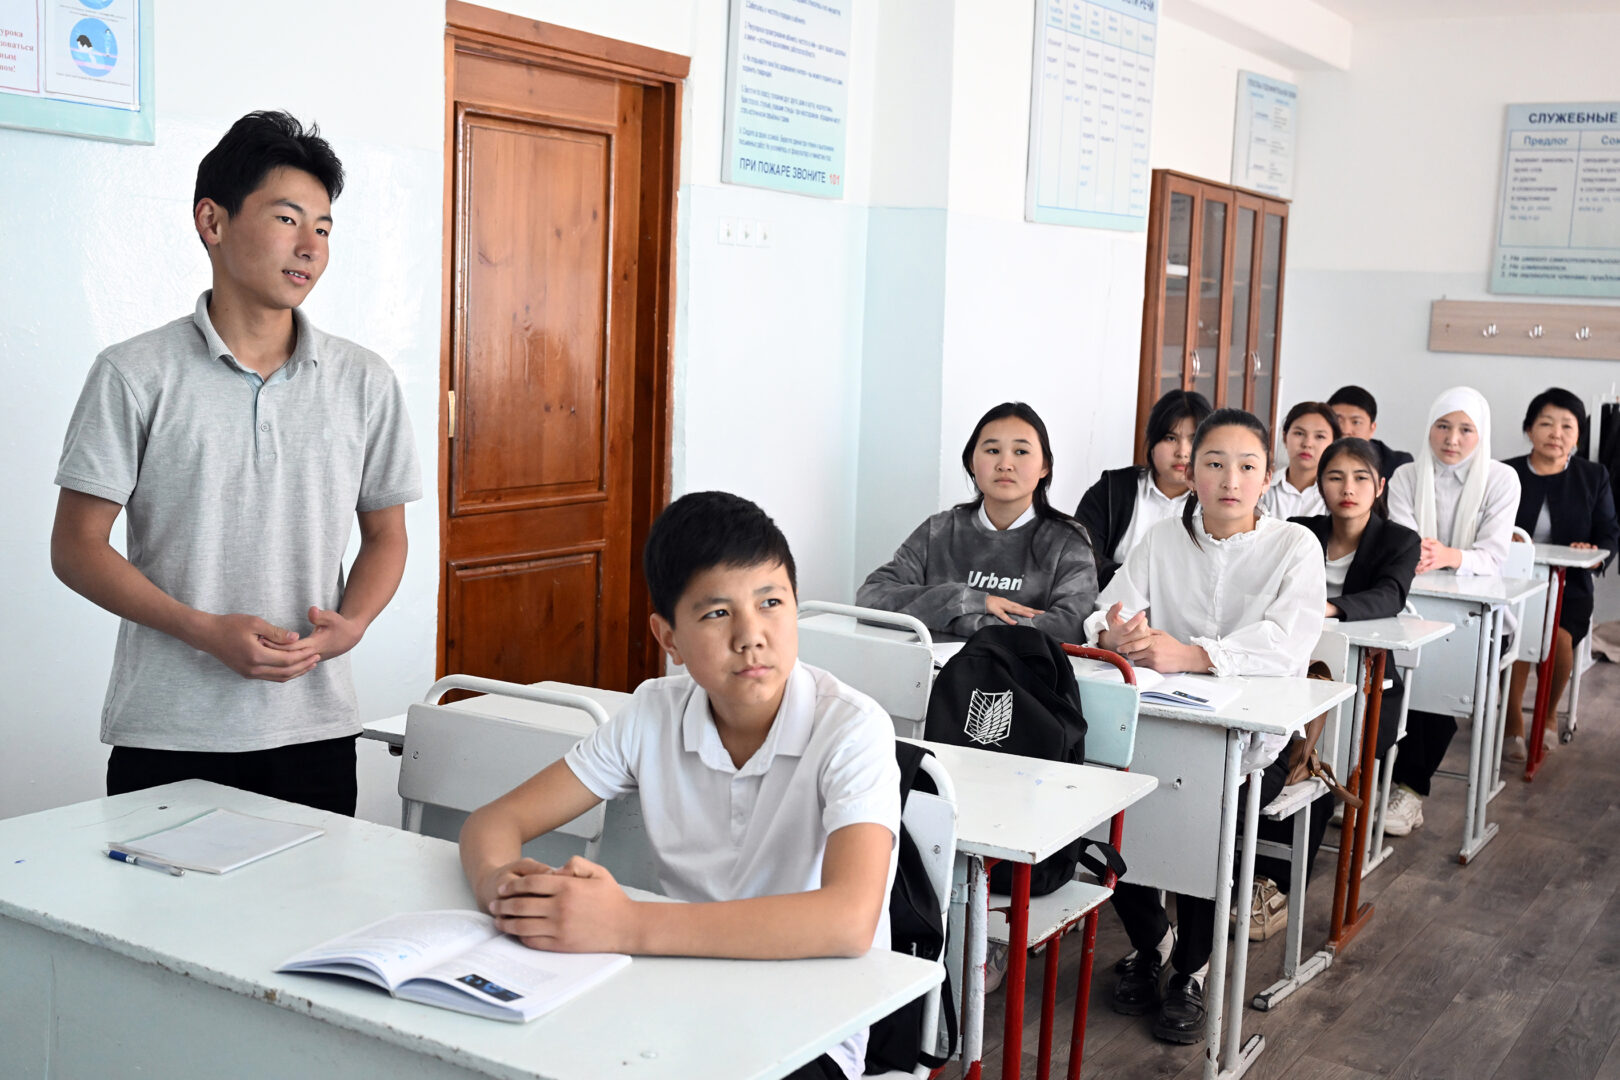 DOS 3548 Президент внепланово посетил одну из школ Бишкека и посидел на уроке - фото